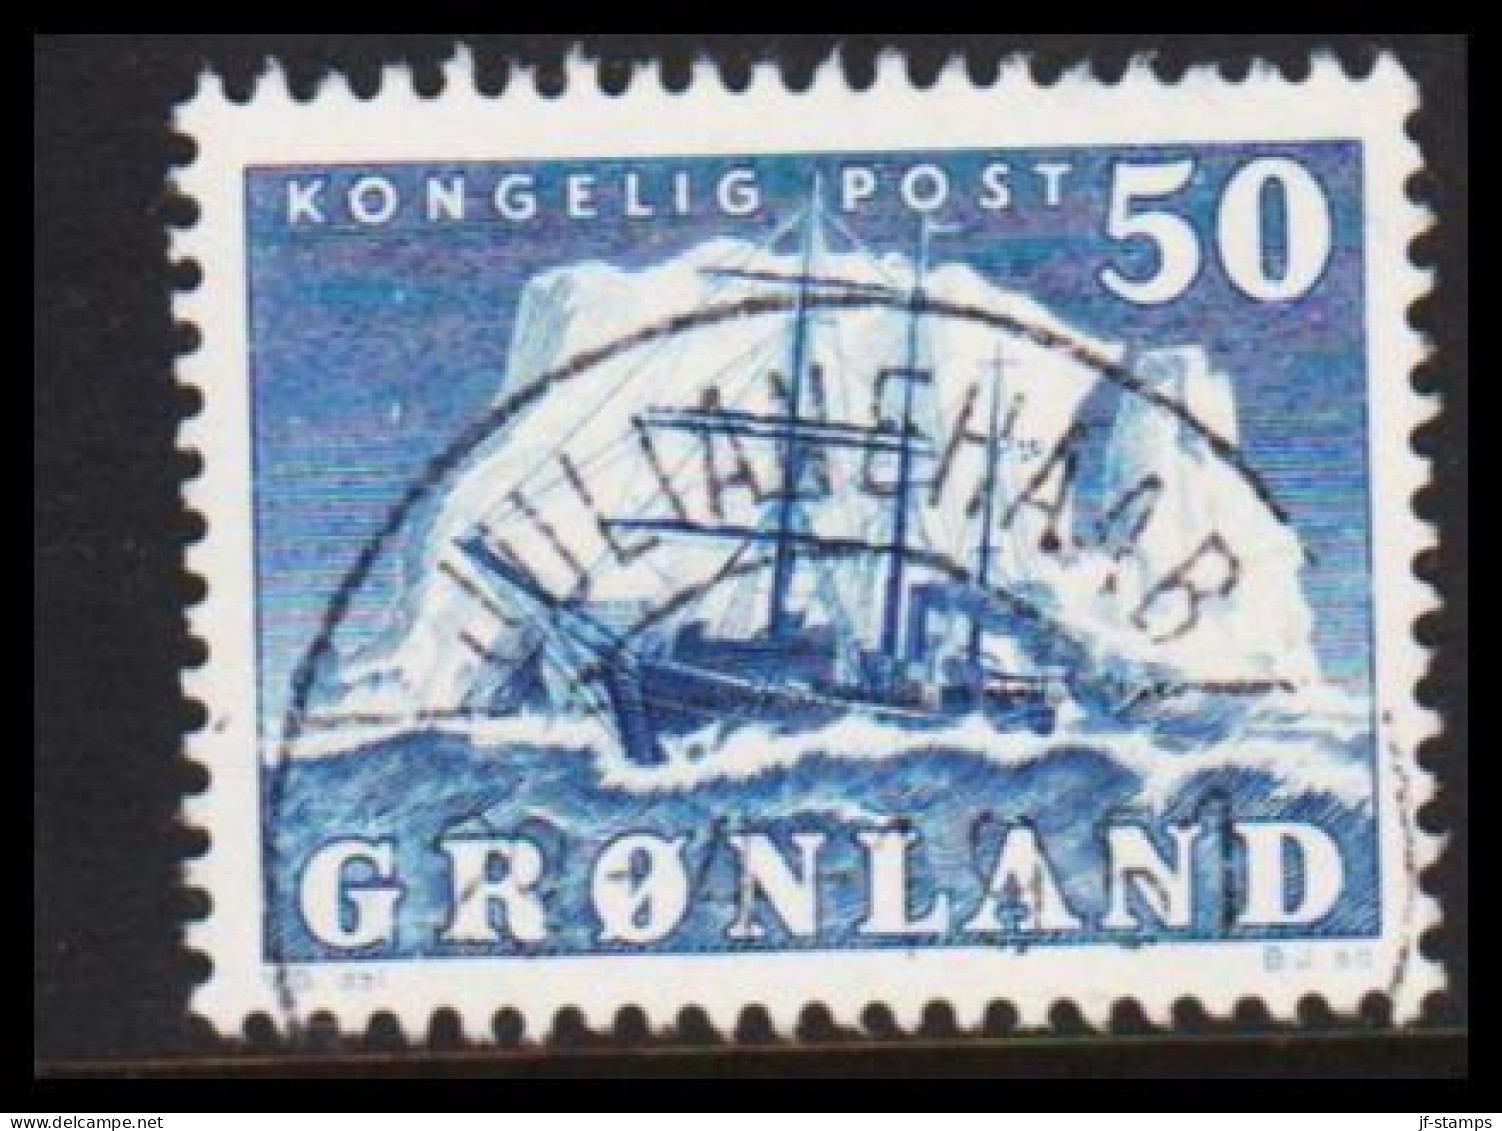 1950. GRØNLAND. Gustav Holm. 50 ØRE. Luxus Cancel JULIANEHAAB 22-4-1951. Very Unusual In This ... (Michel 34) - JF543736 - Used Stamps